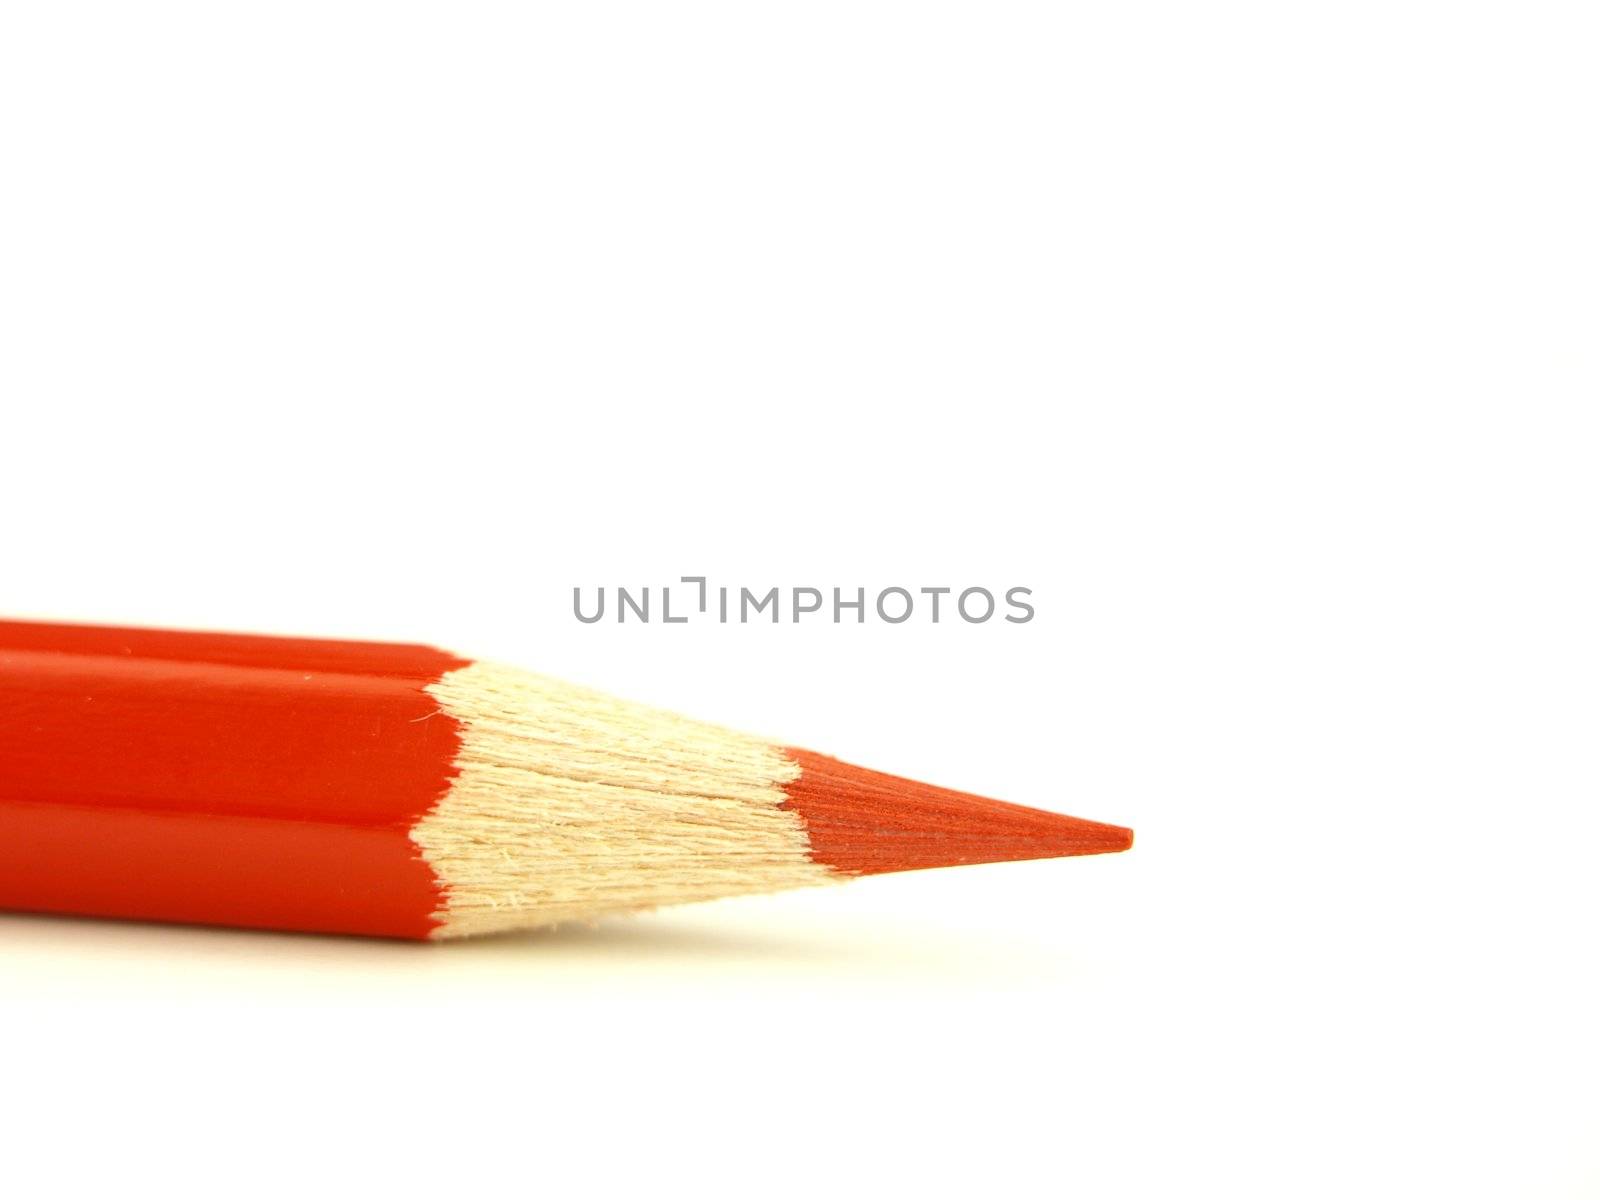 crayon and pencil by luckyhumek